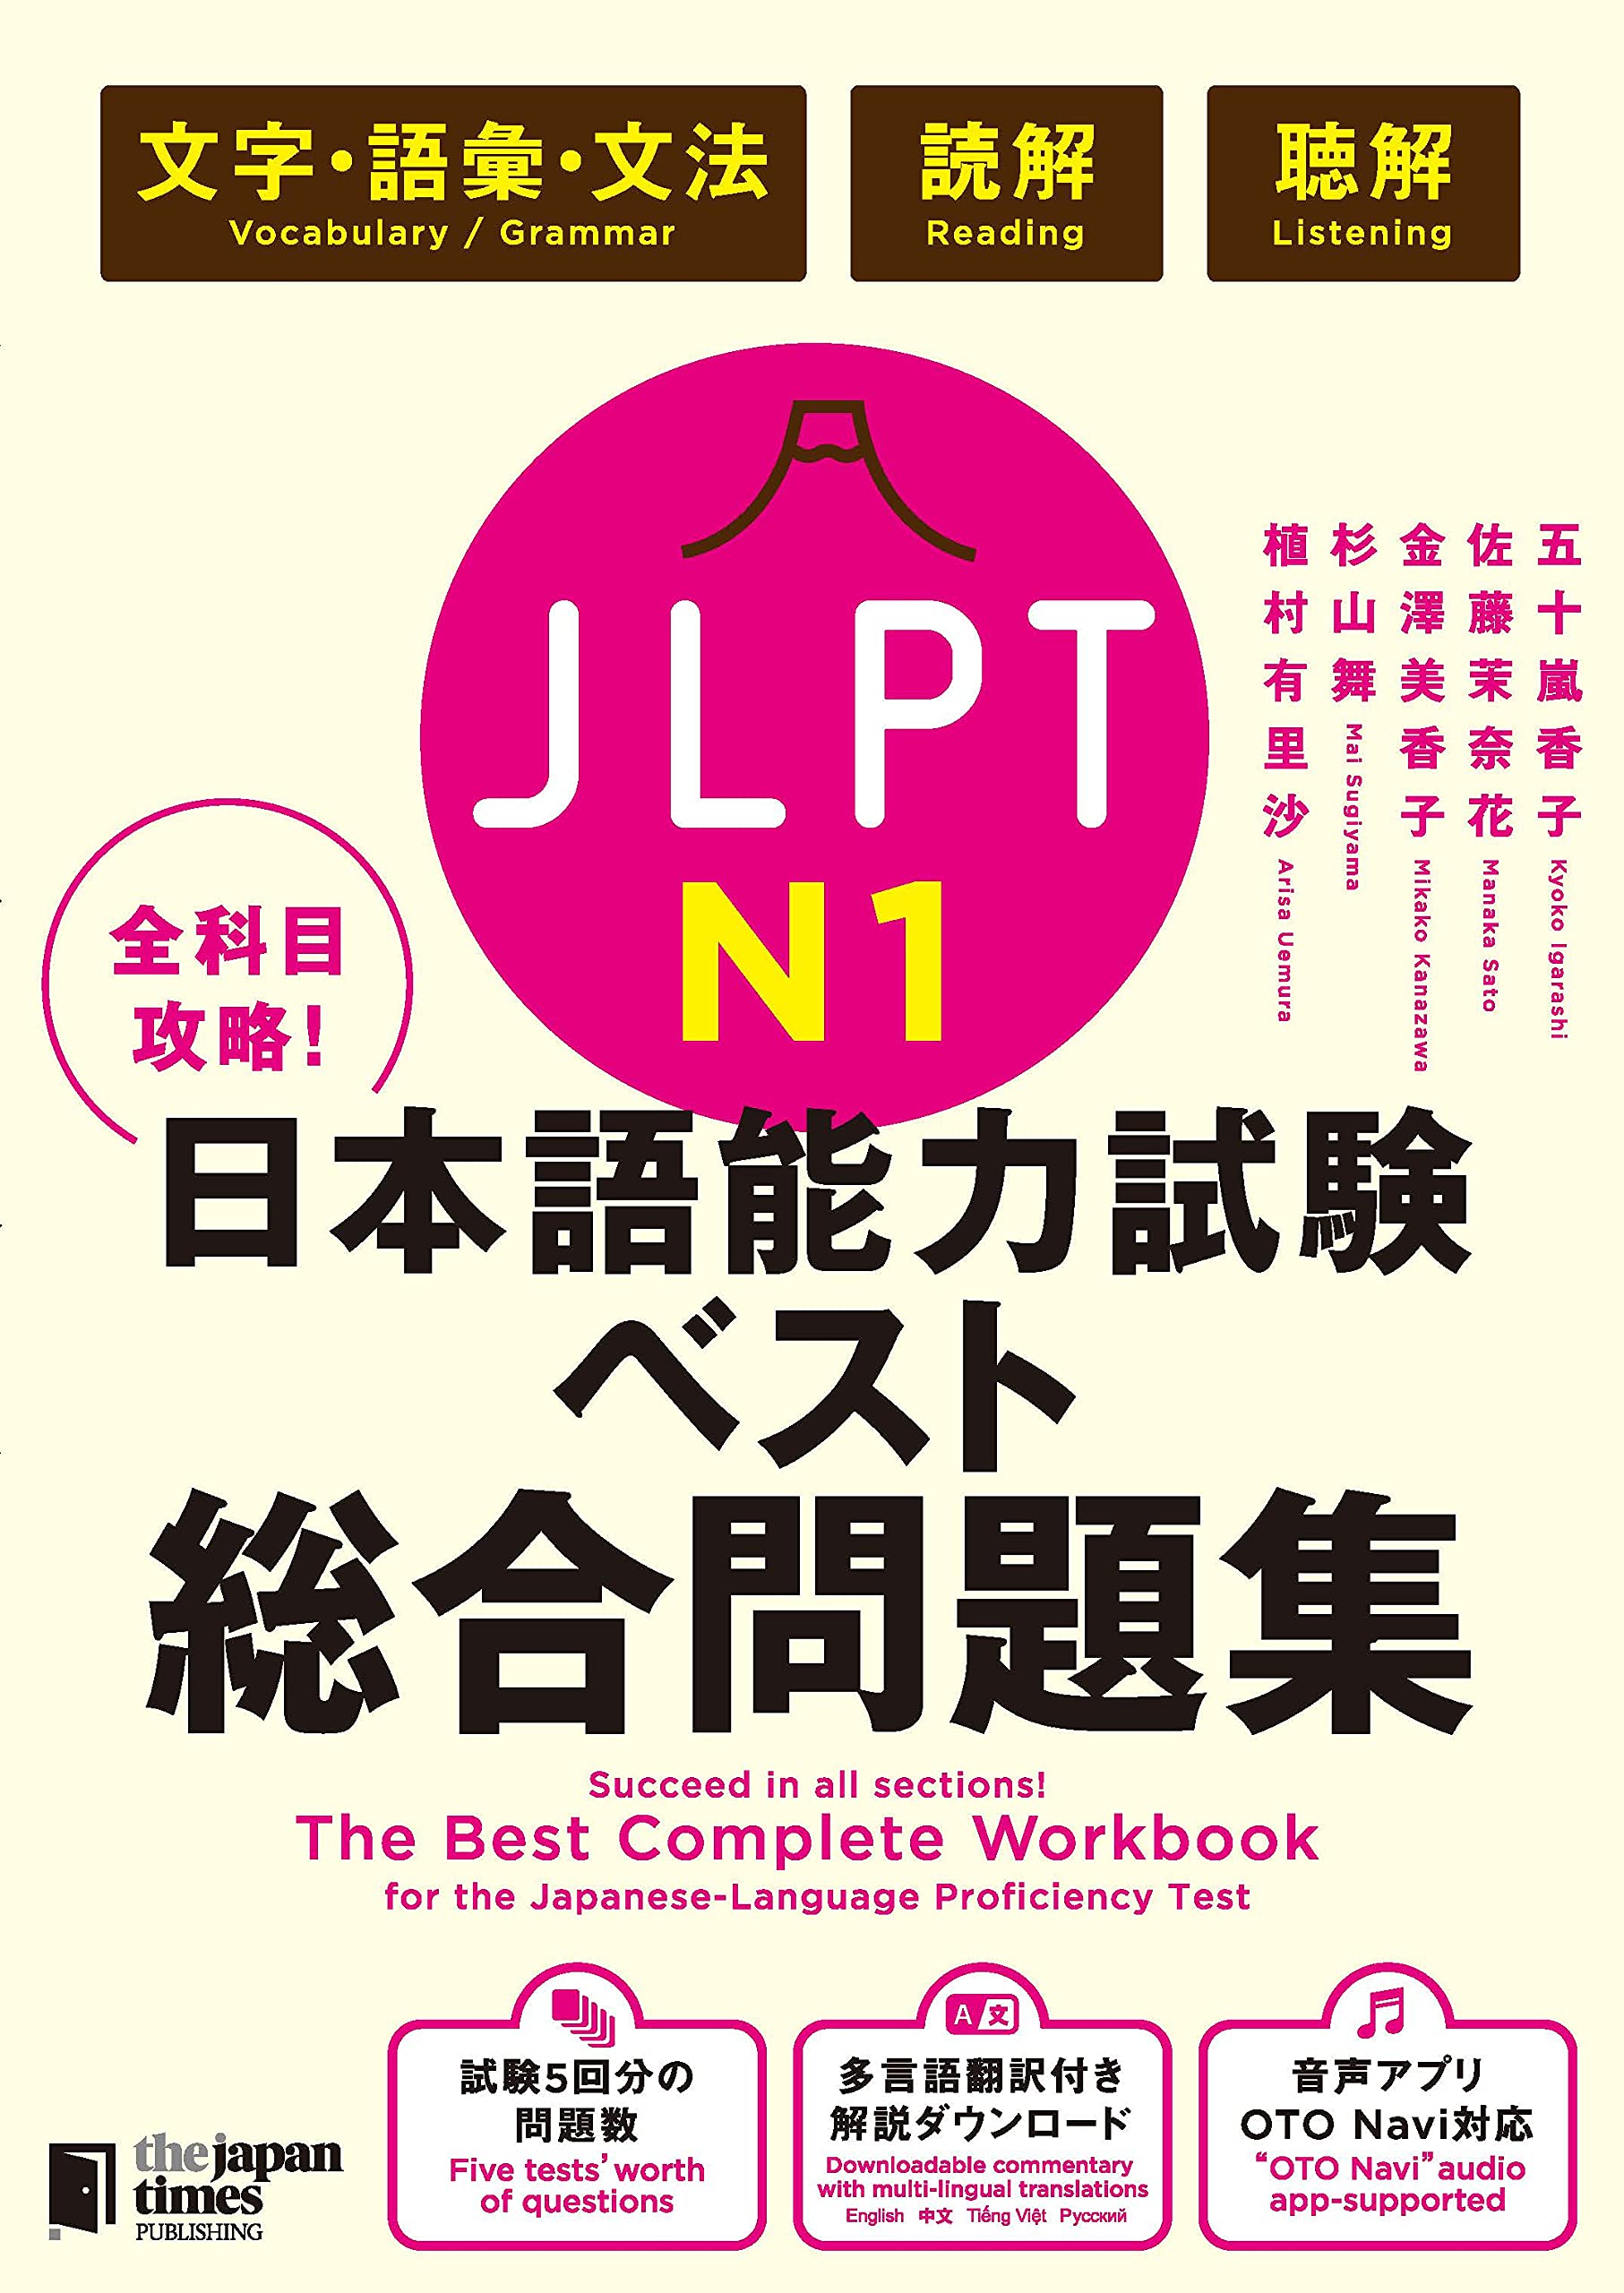 全科目攻略! JLPT日本語能力試驗ベスト總合問題集N1-言語知識(文字·語彙·文法)·讀解·聽解- The Best Complete Workbook for the Japanese-Language Proficiency Test N1 - Language Knowledge (Voca